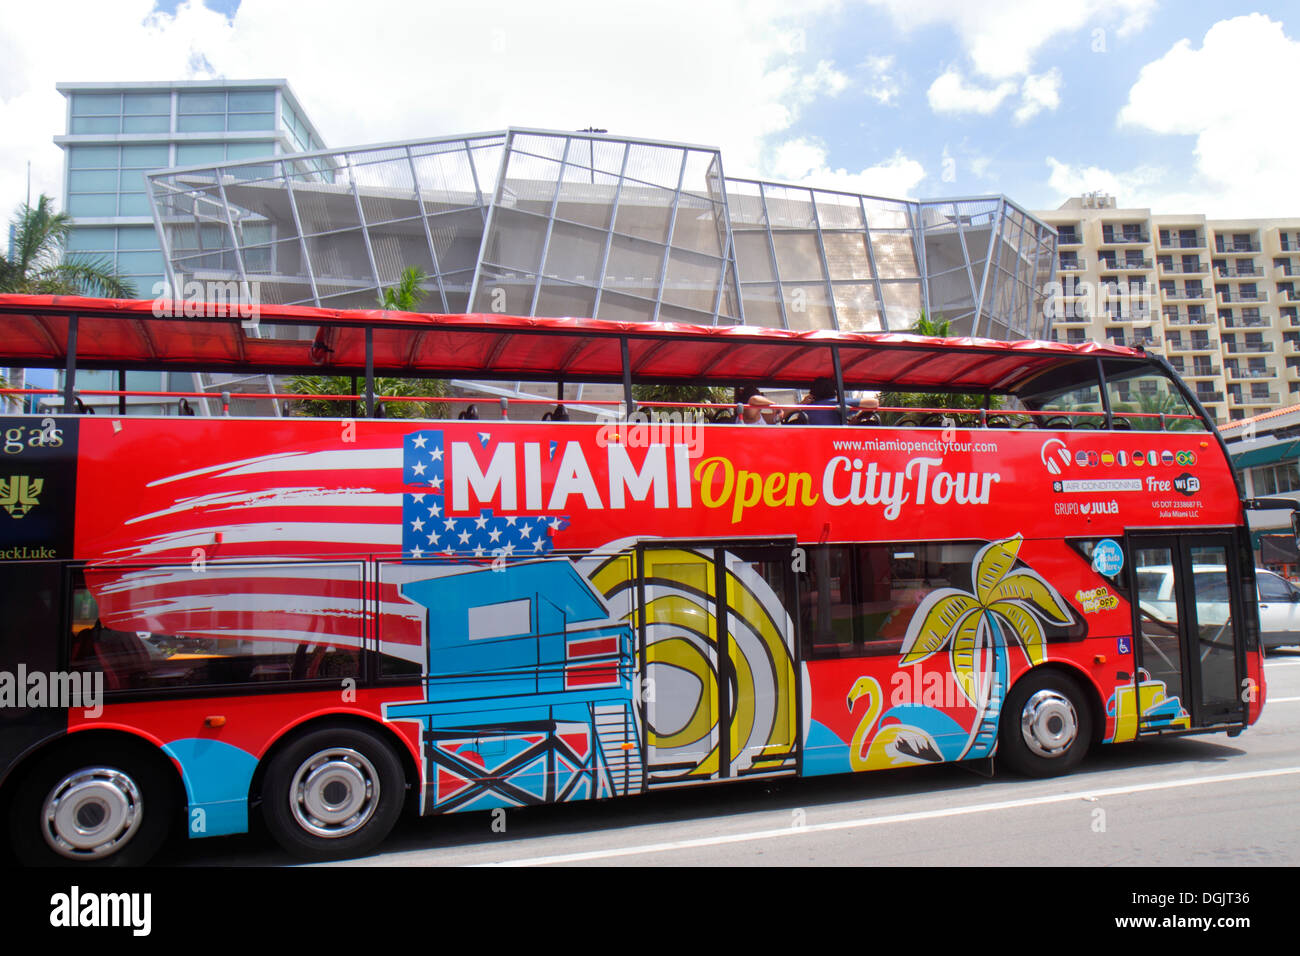 Miami Beach Florida,Miami Open City Tour,double decker bus,coach,red,colorful,looking FL130731208 Stock Photo